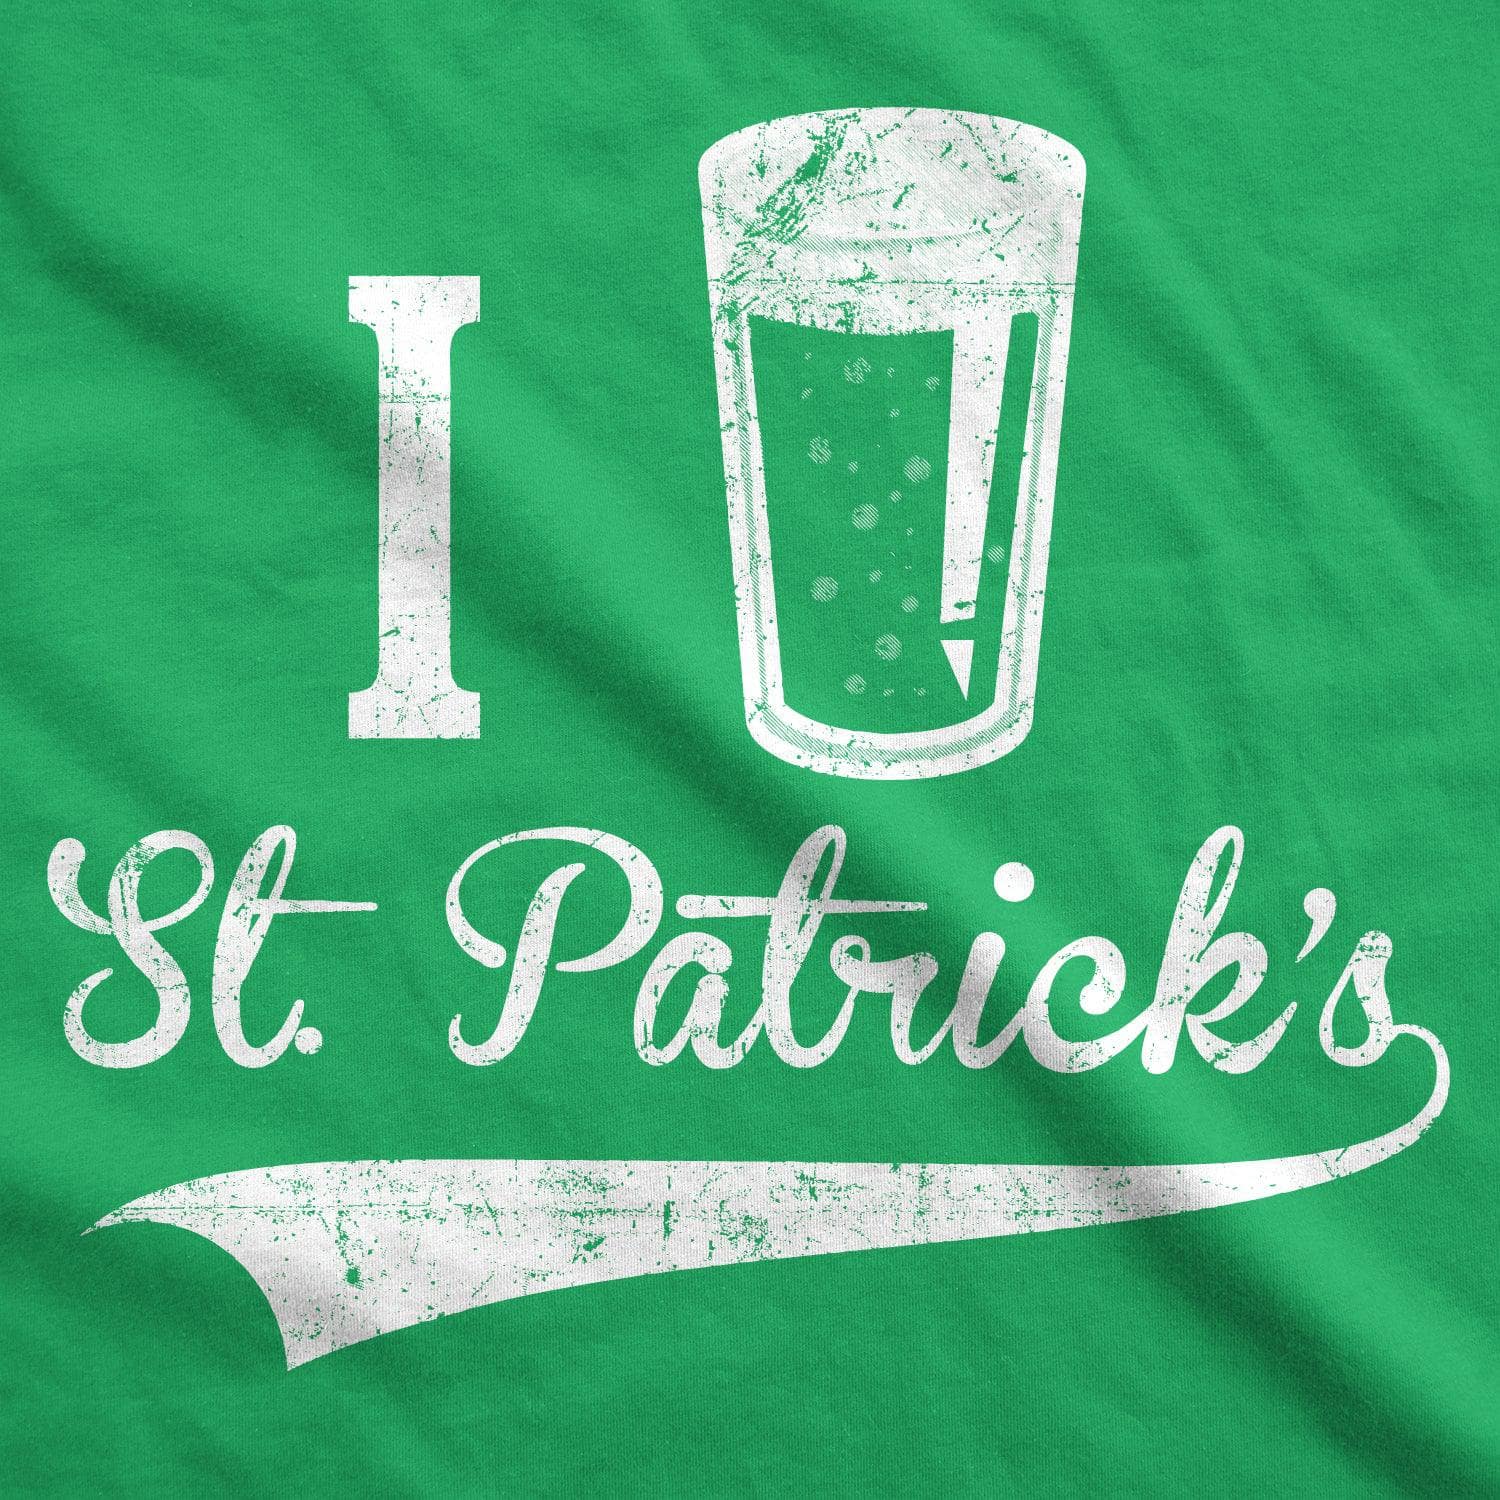 I Beer St. Patrick's Day Men's Tshirt  -  Crazy Dog T-Shirts